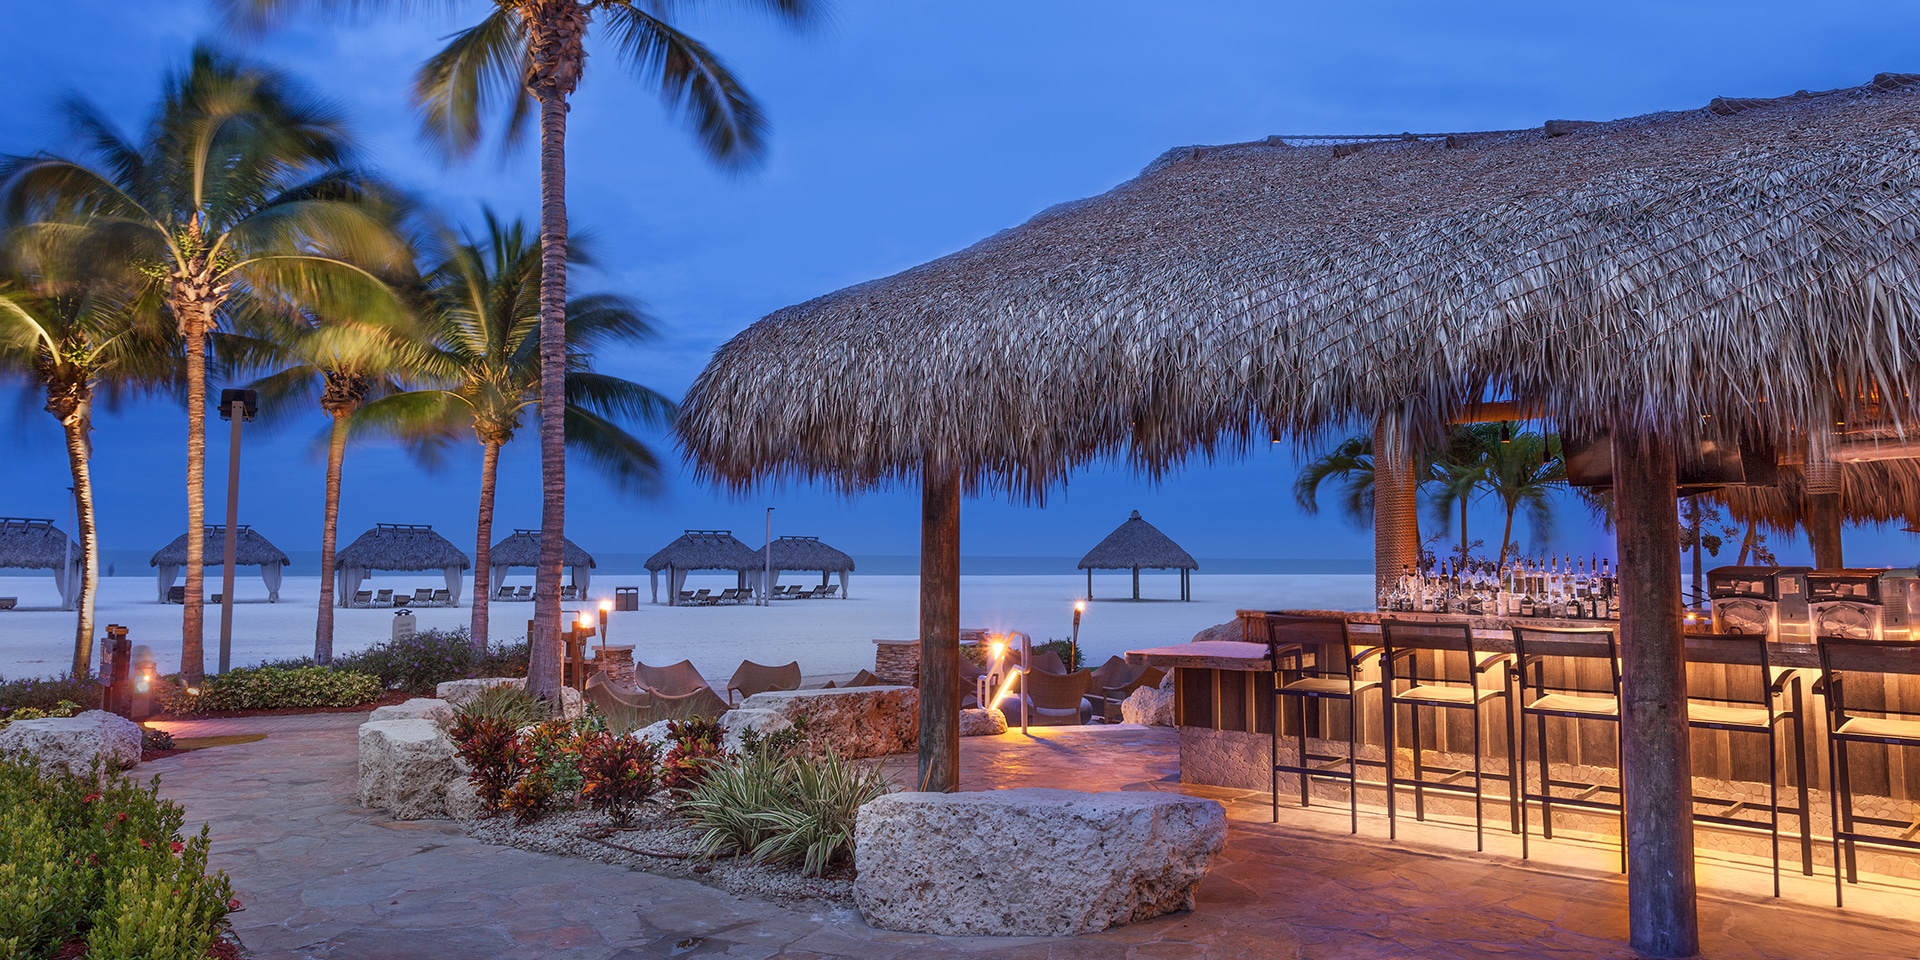 Sunshine State Sips: The Best Florida Beach Bars